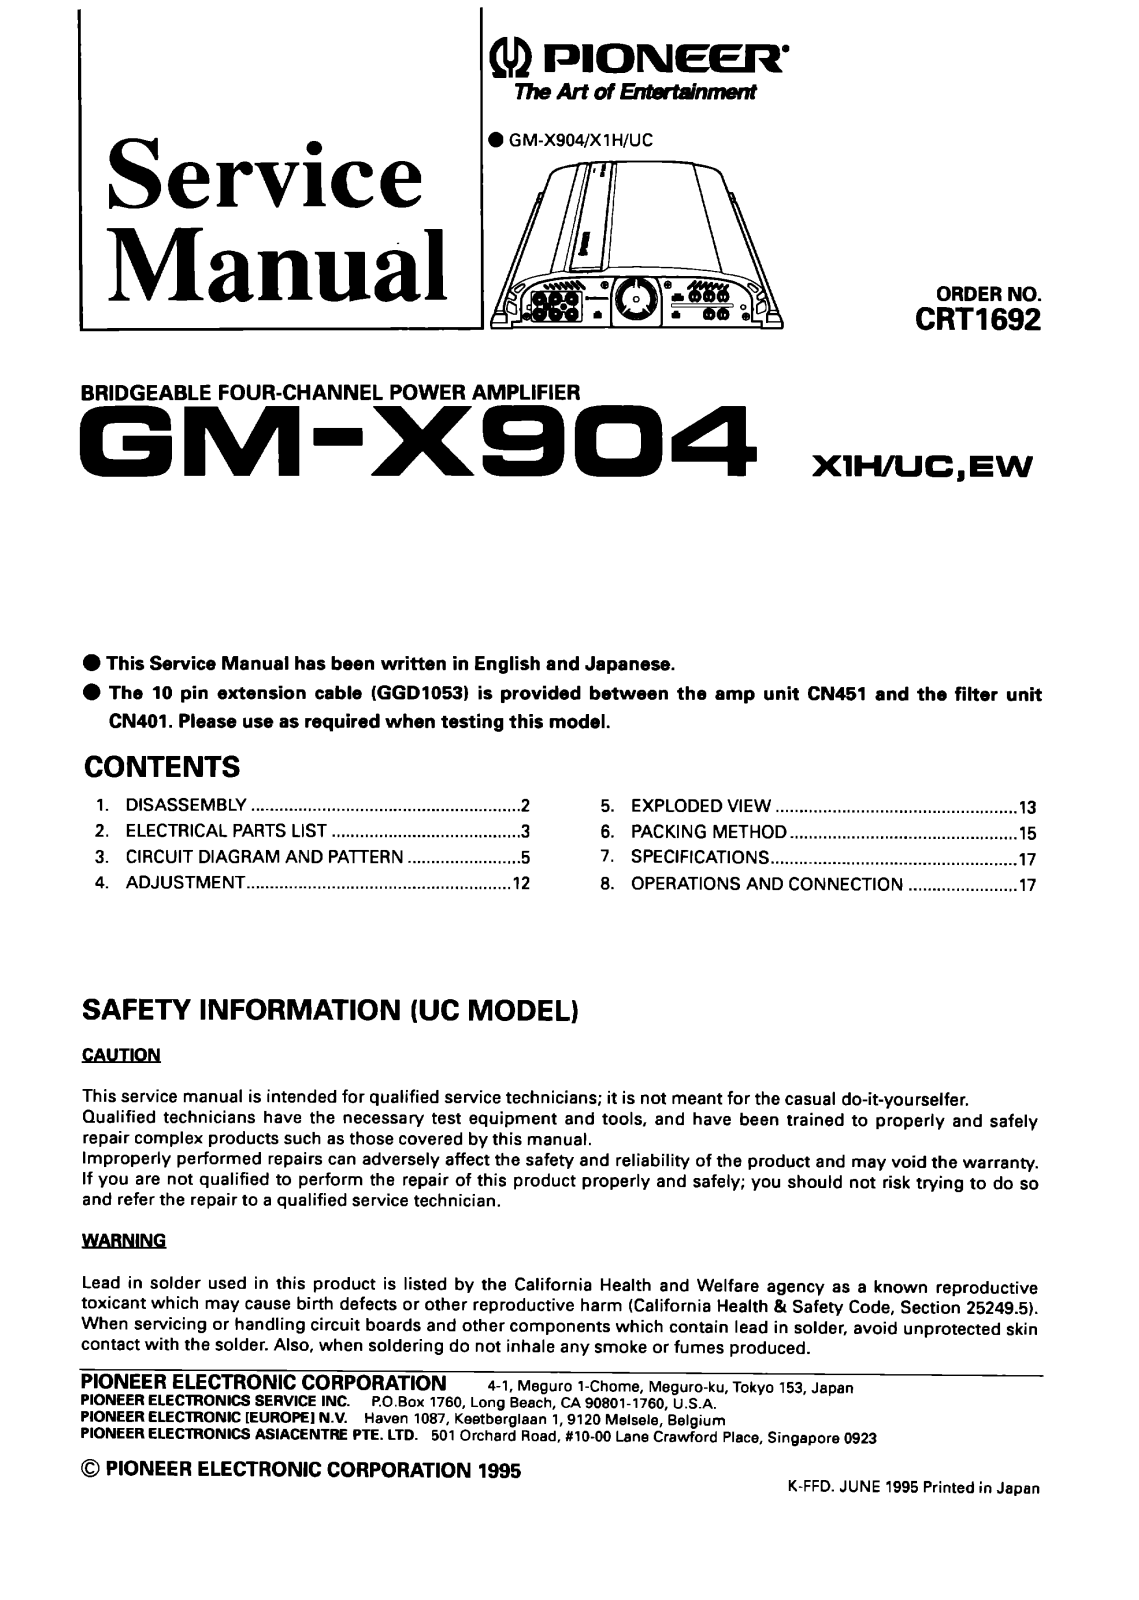 Pioneer GMX-904 Service manual